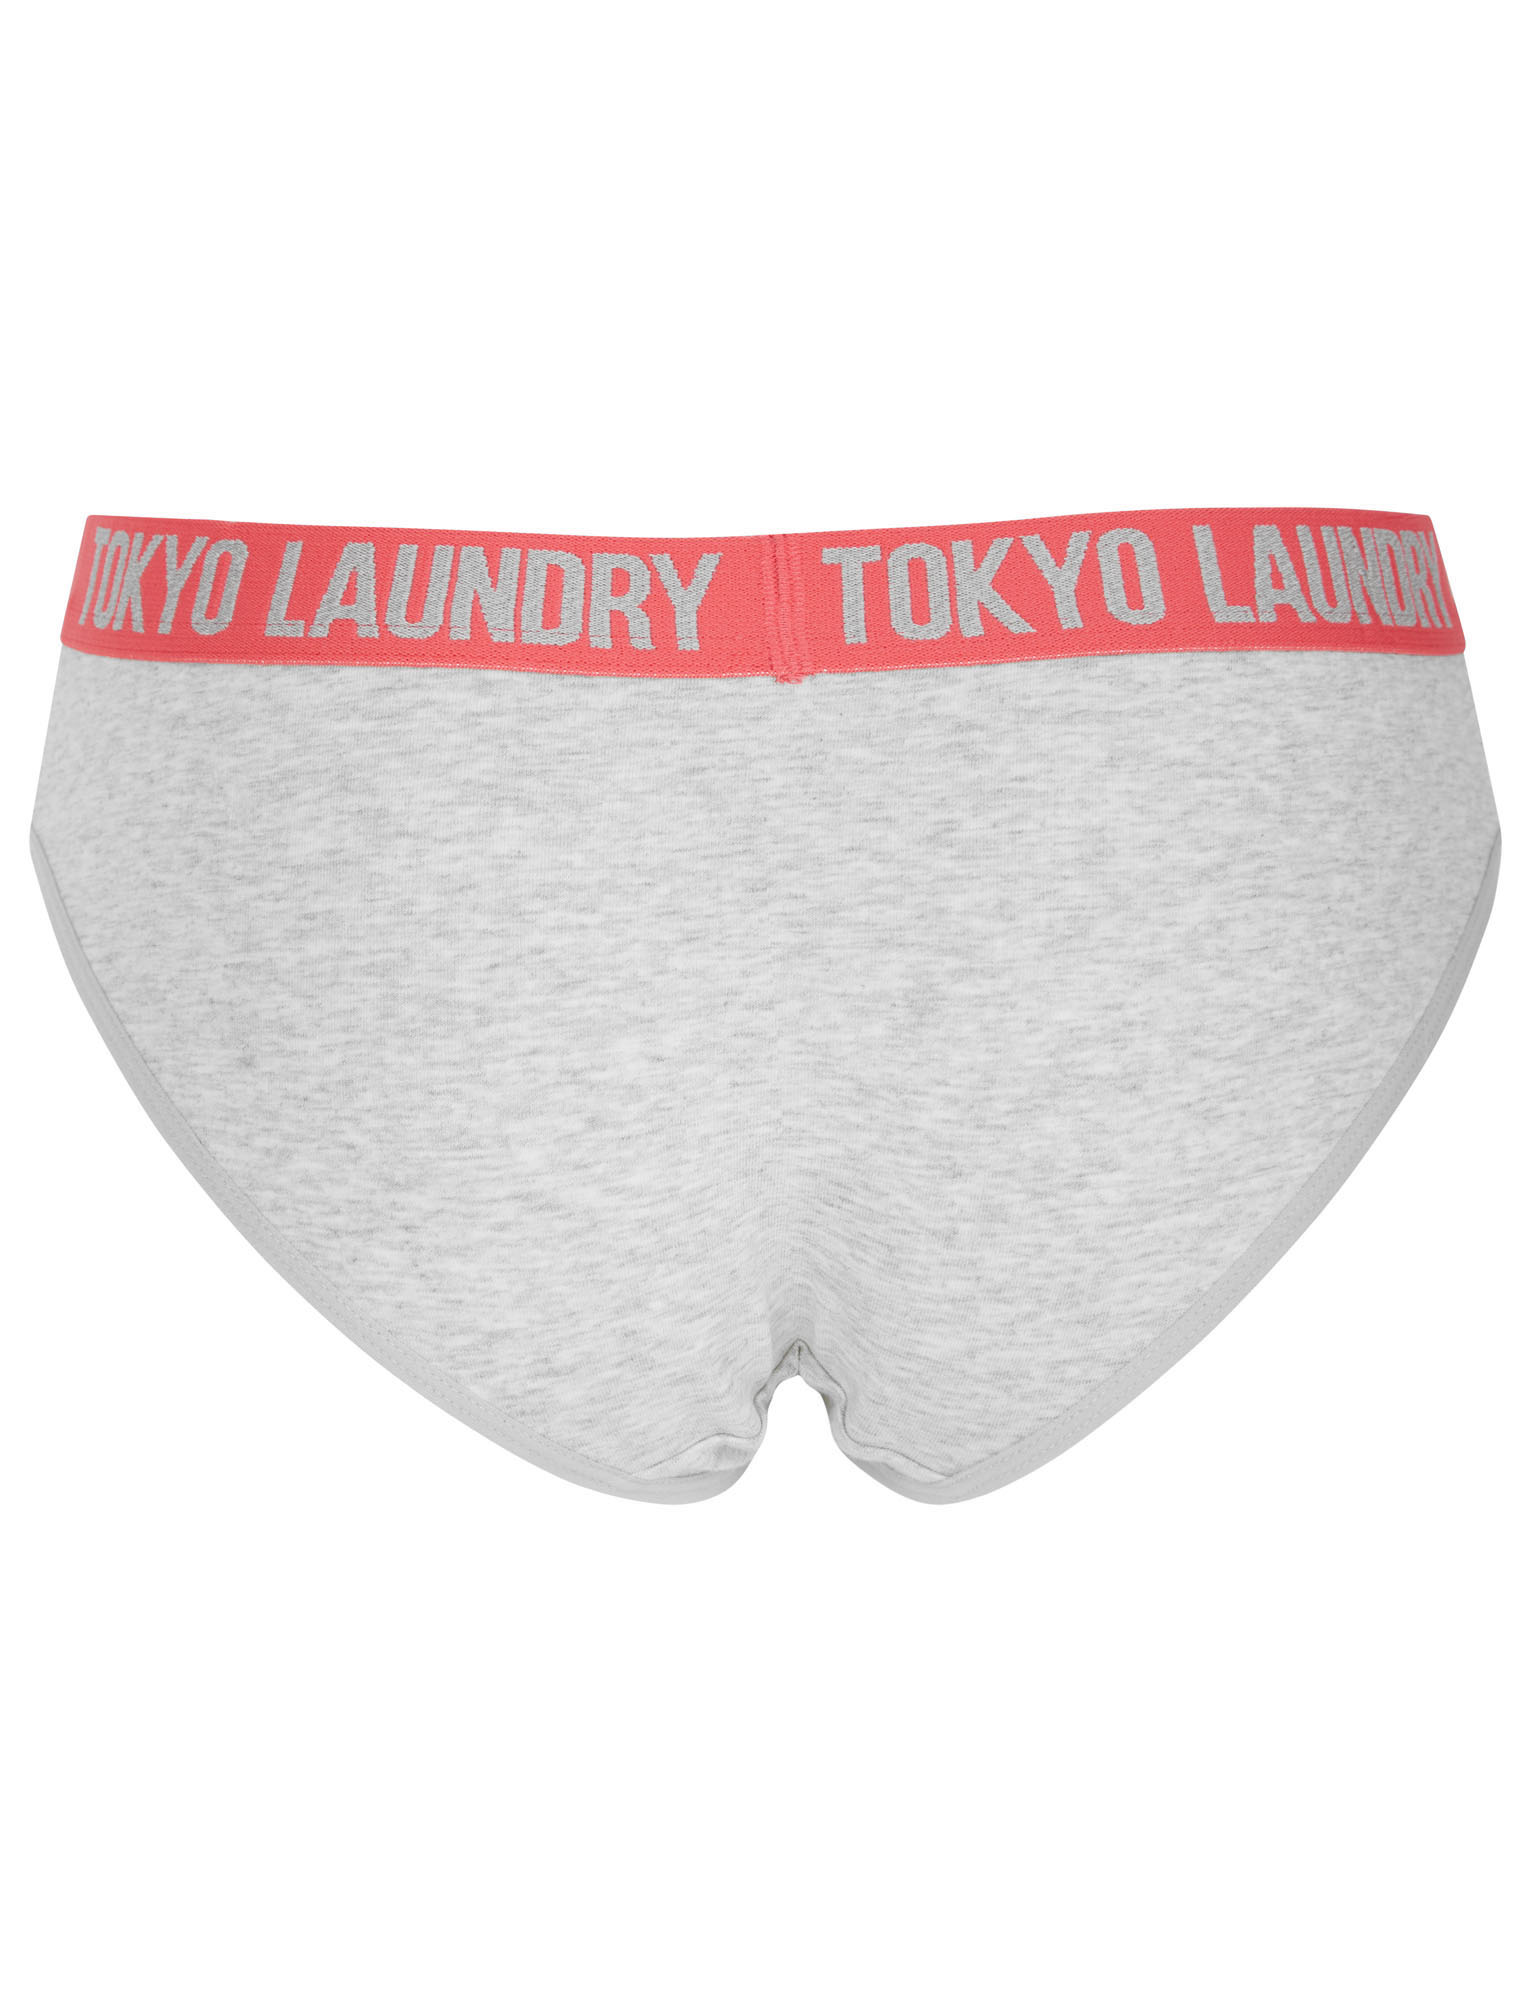 Tokyo Laundry Women's 5 Pack Briefs Knickers Underwear Thongs ...